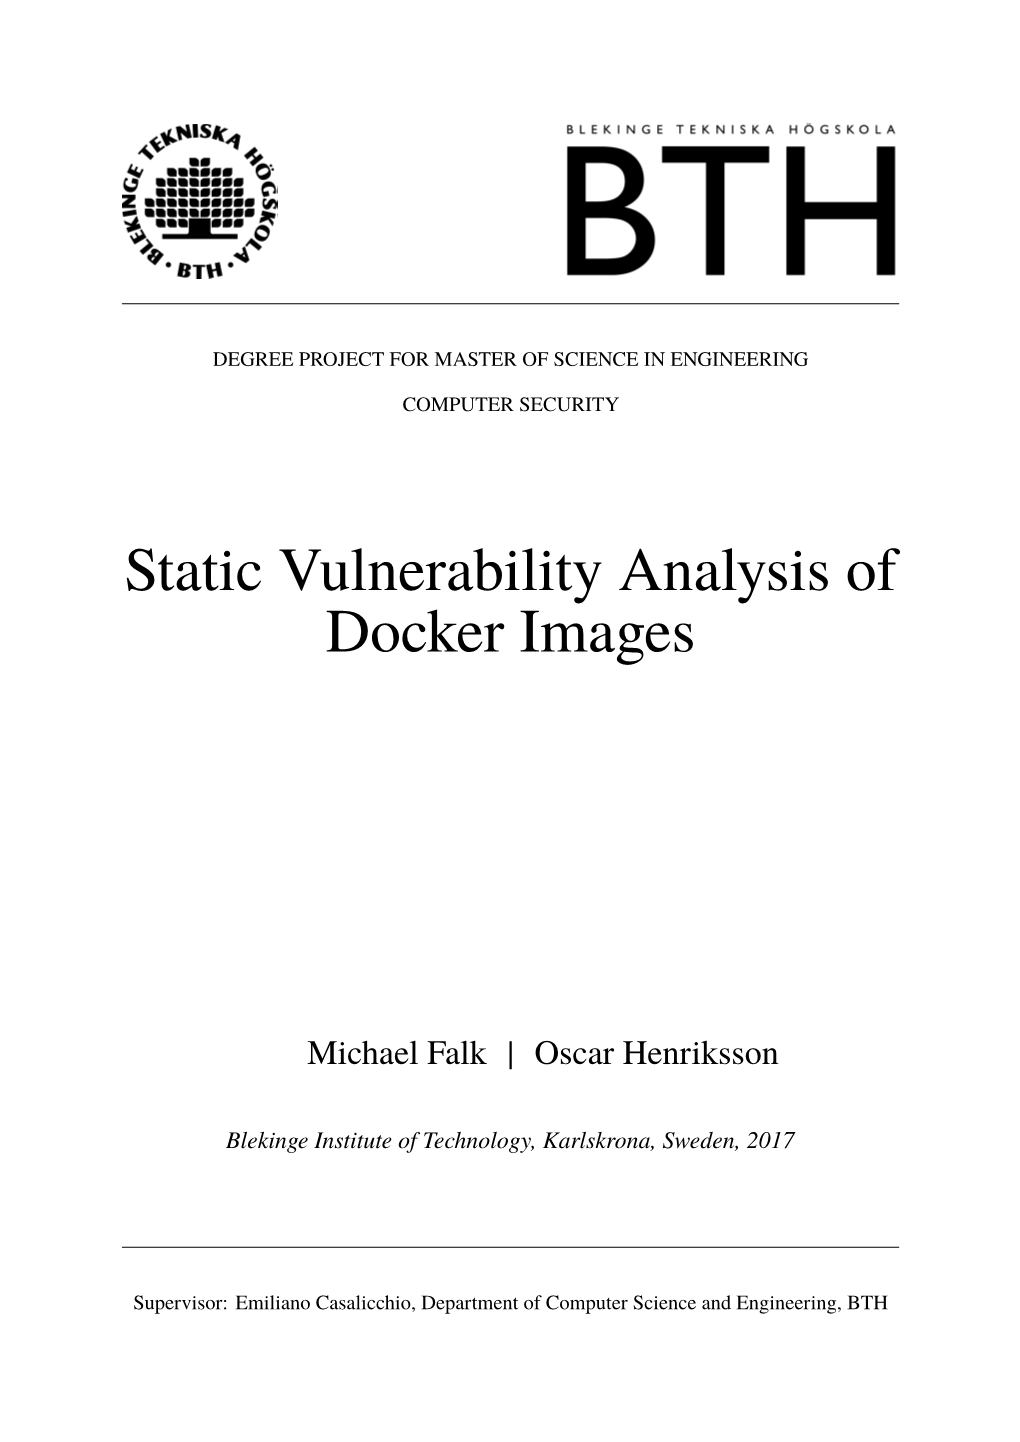 Static Vulnerability Analysis of Docker Images